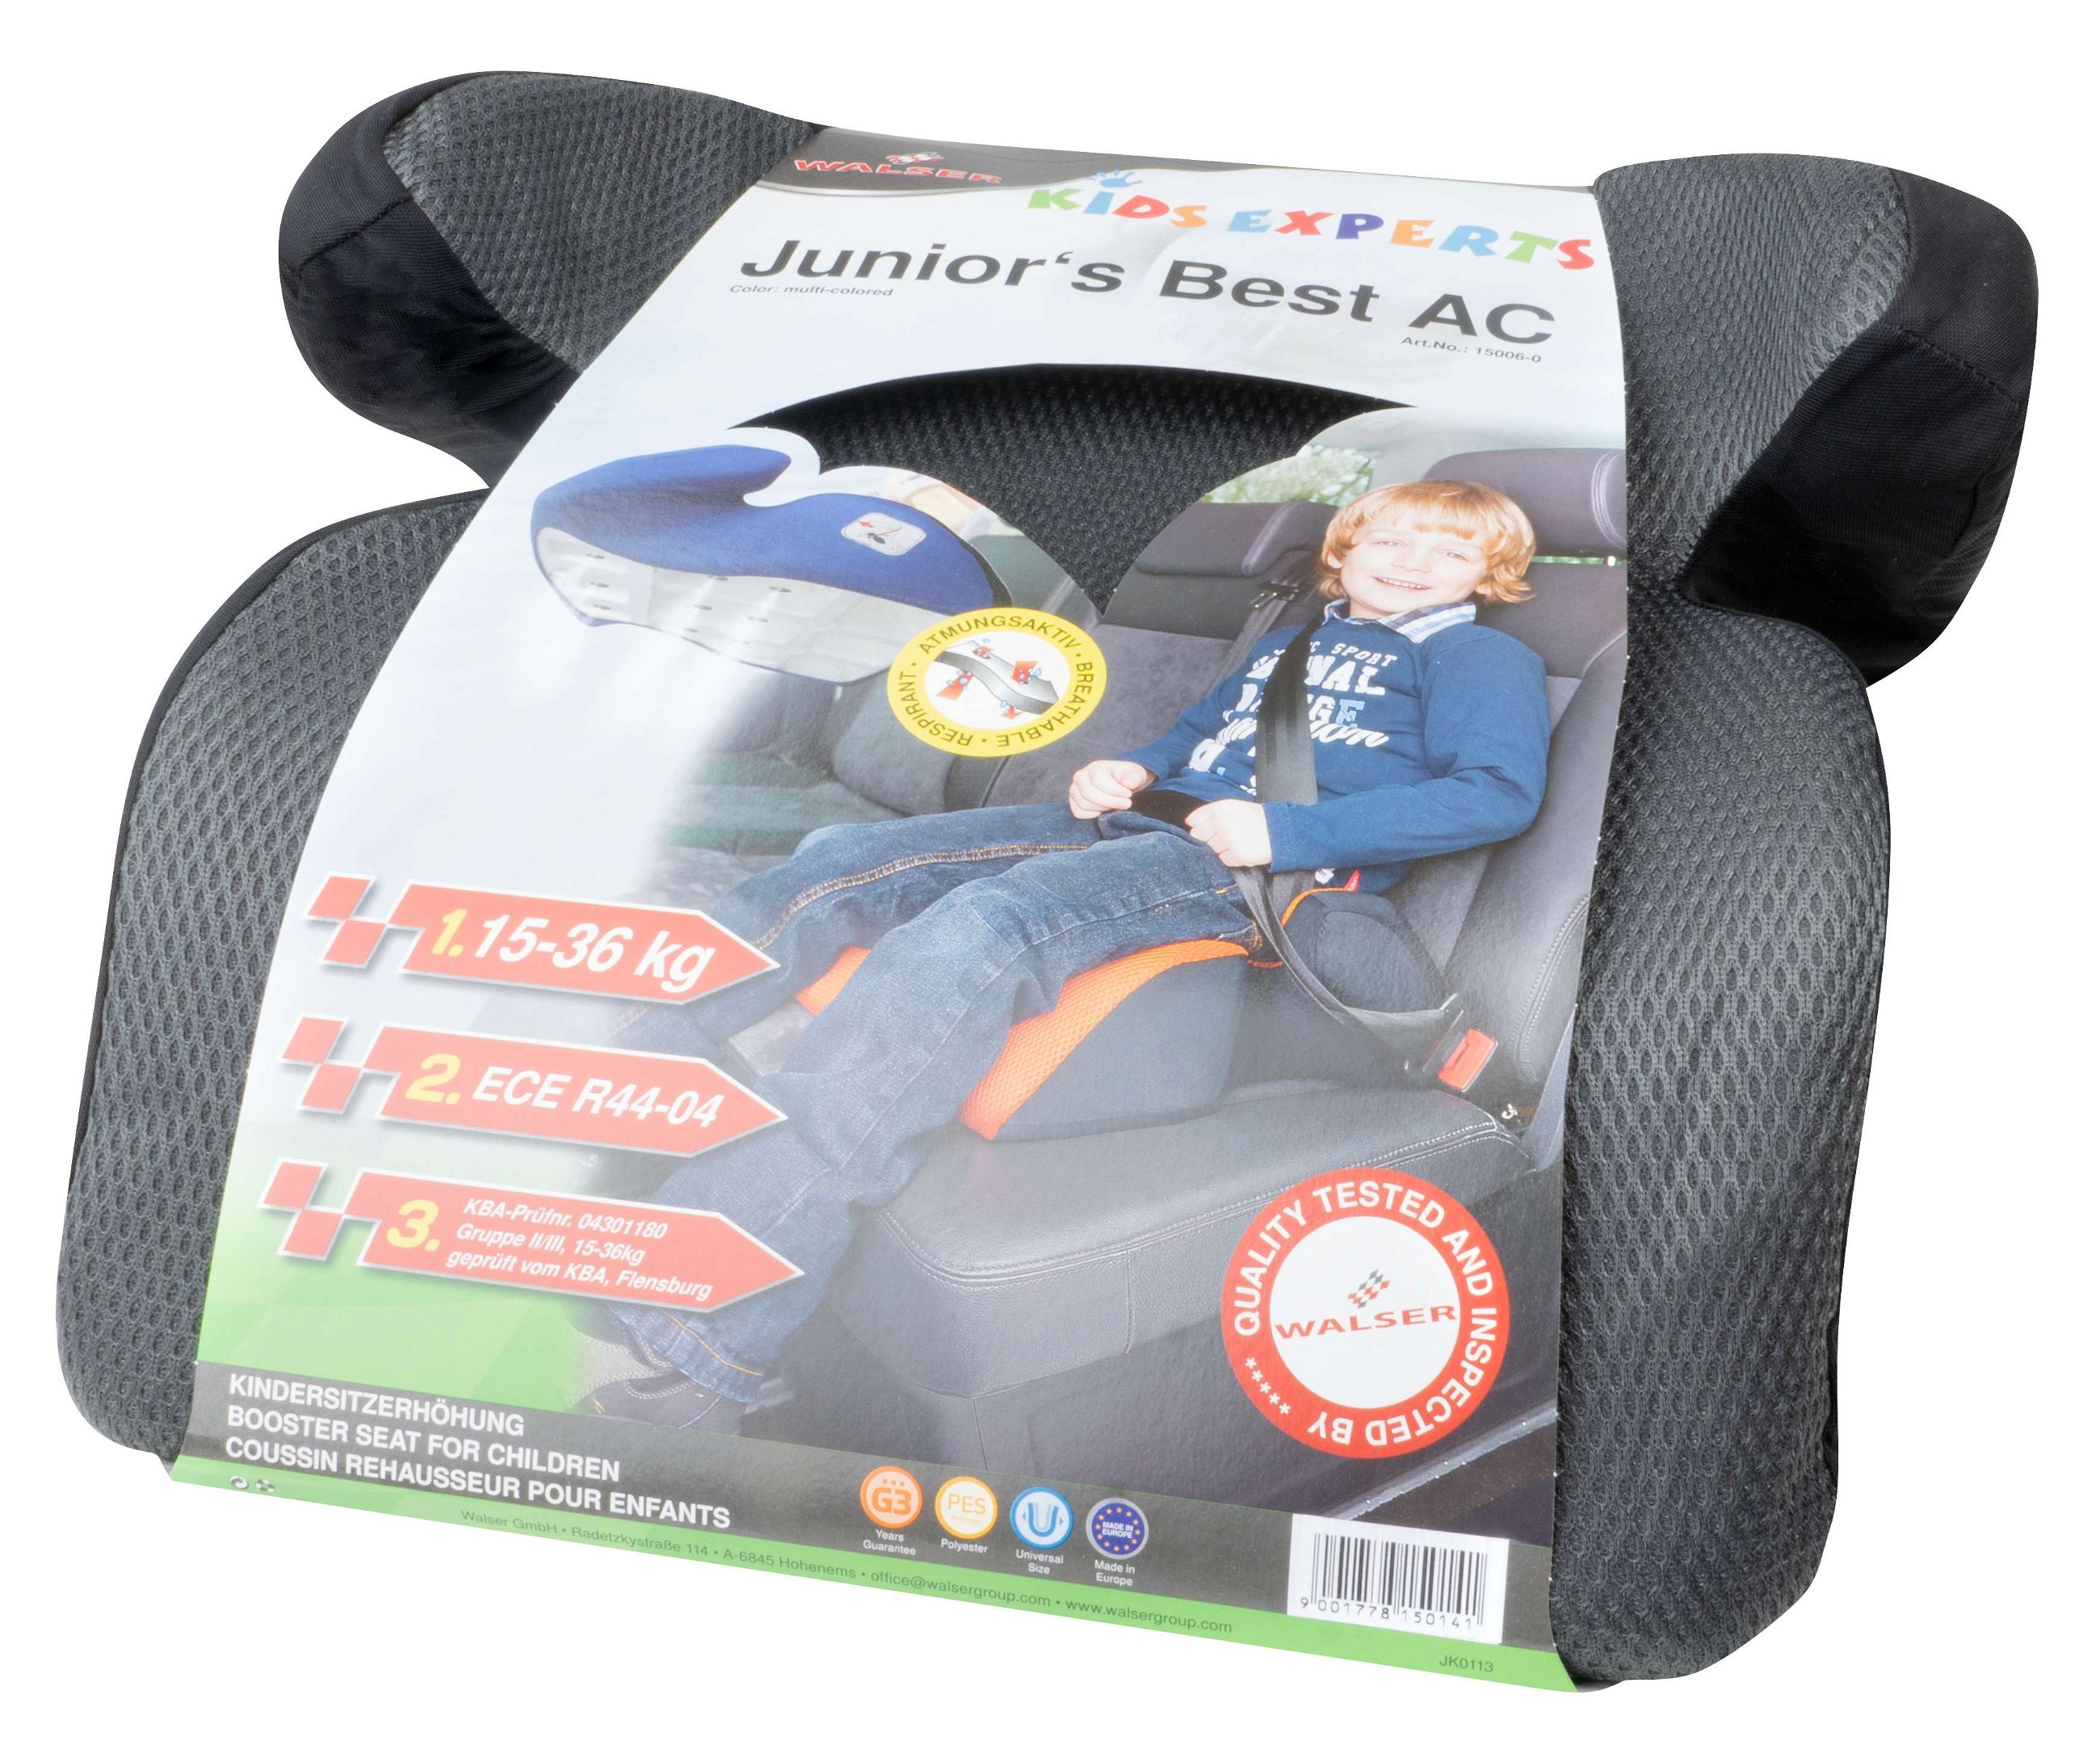 Booster seat for children Juniors Best anthracite